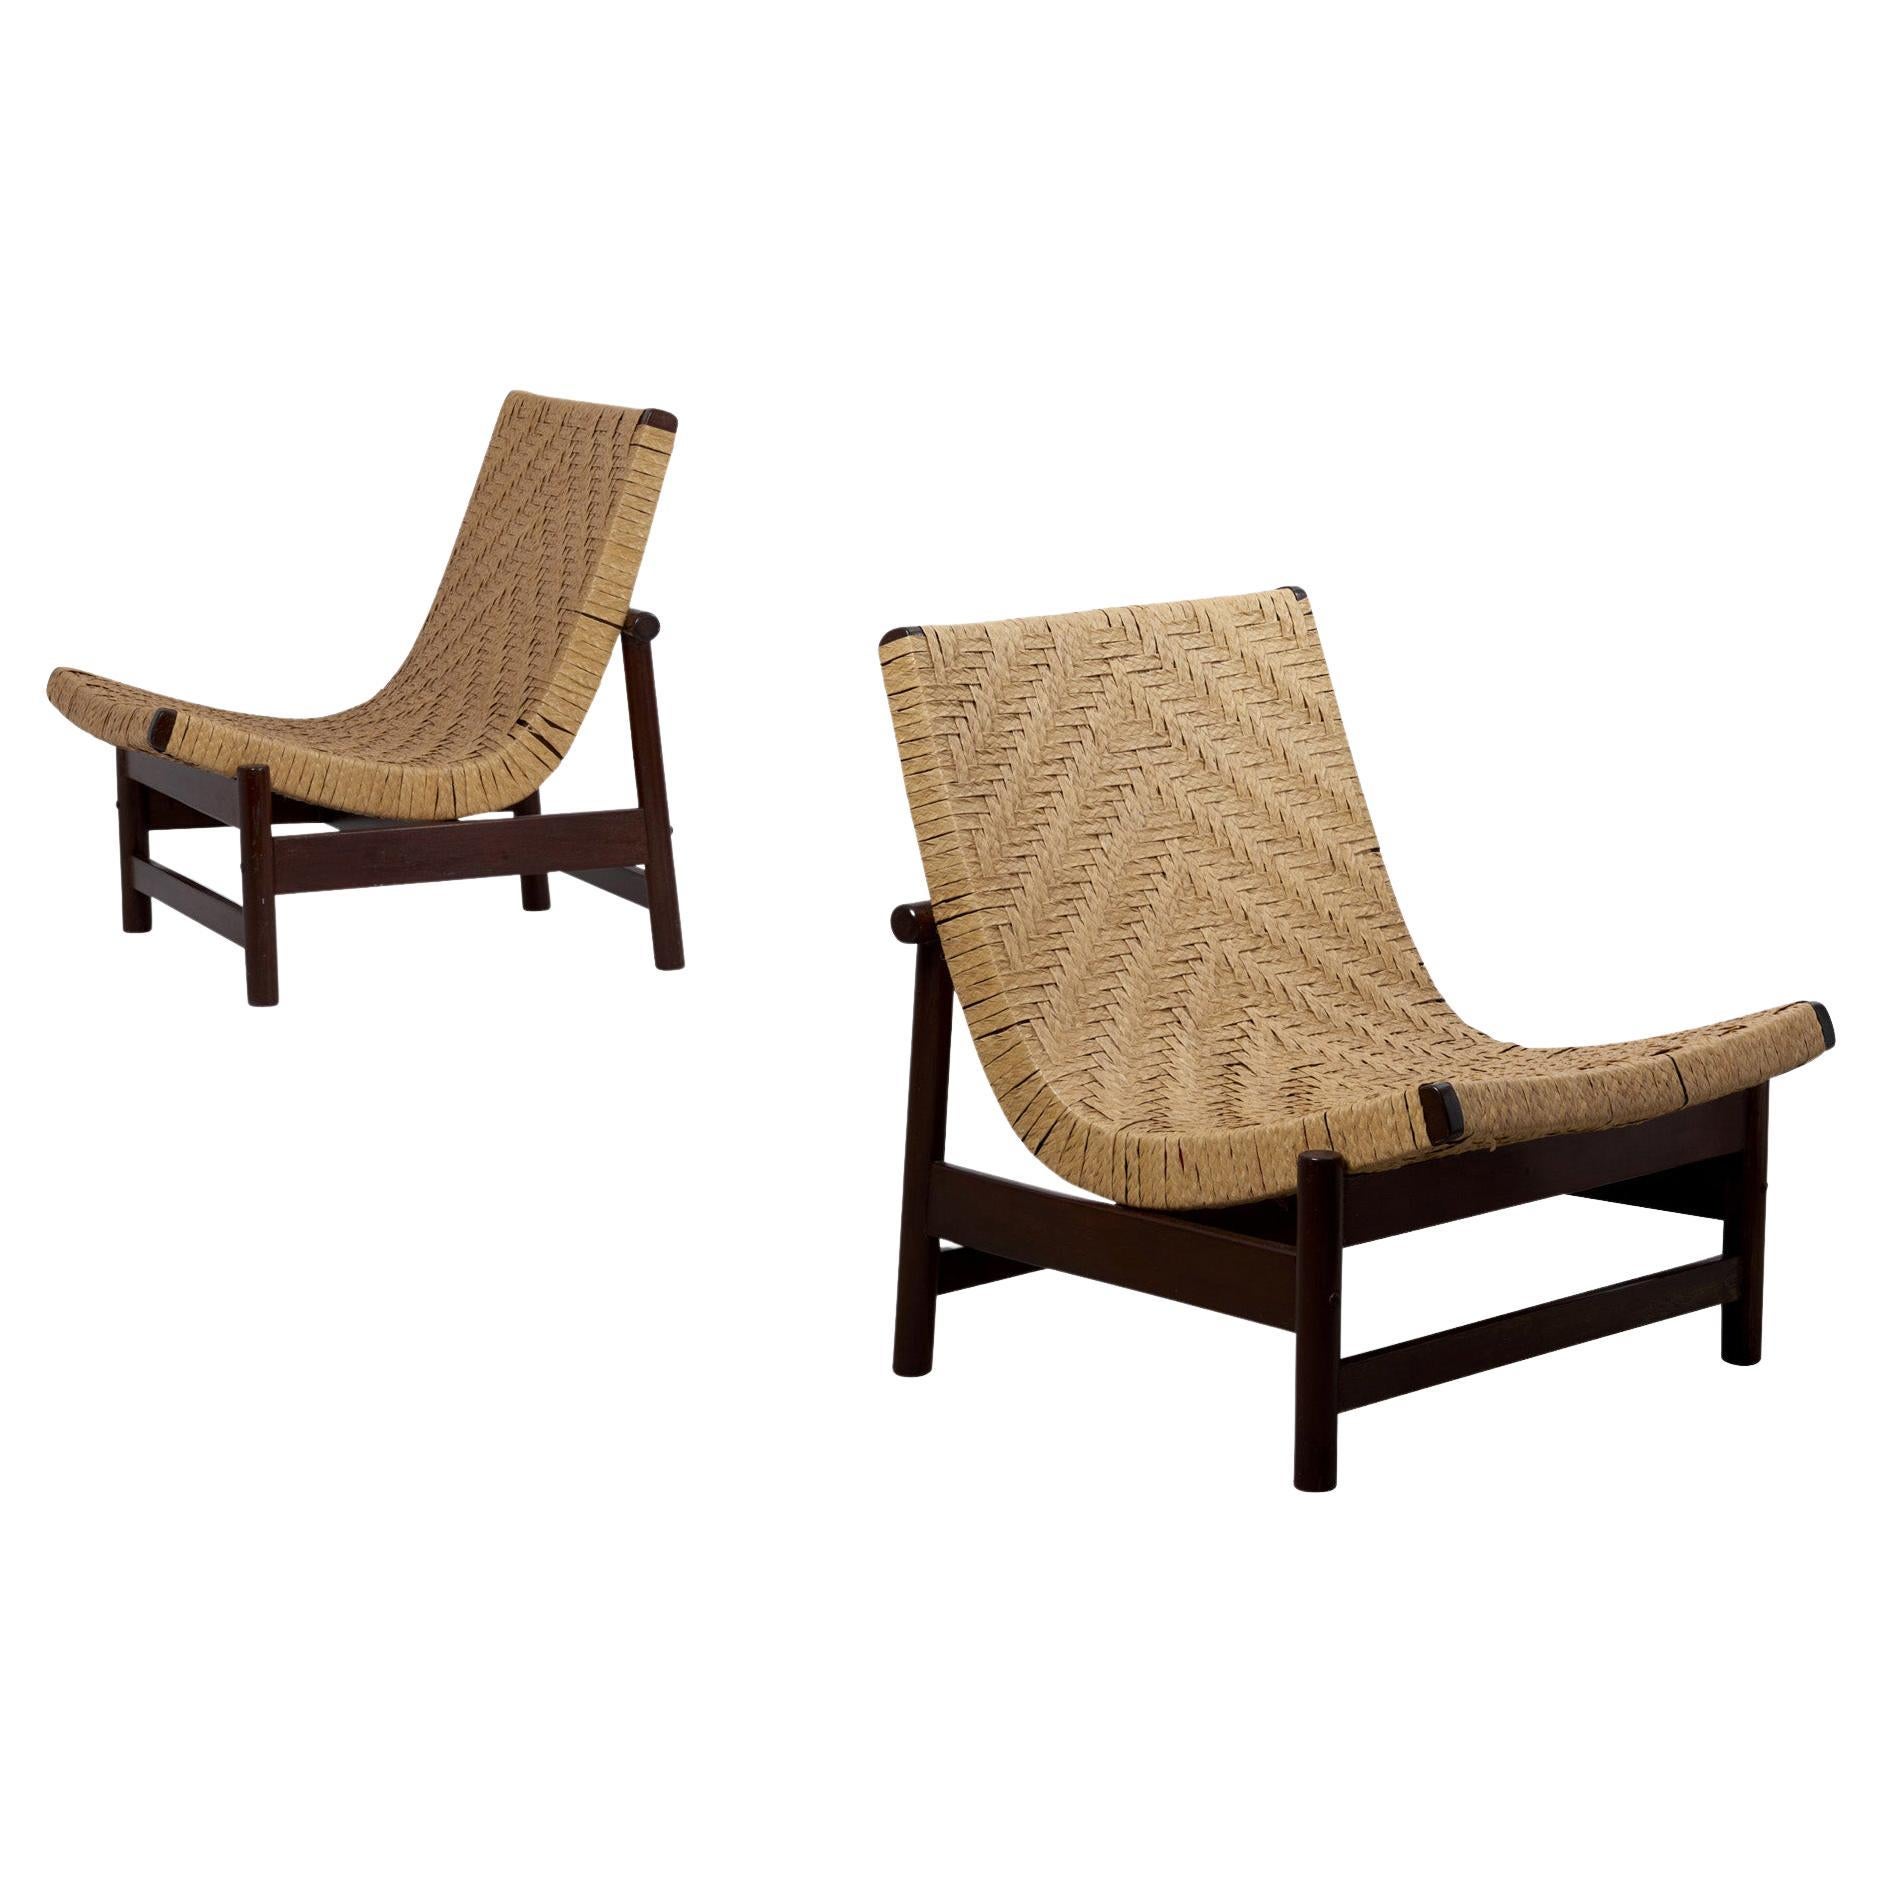 Pair of beige Guama Lounge Chairs by Gonzalo Cordoba for Dujo, Cuba 1950s